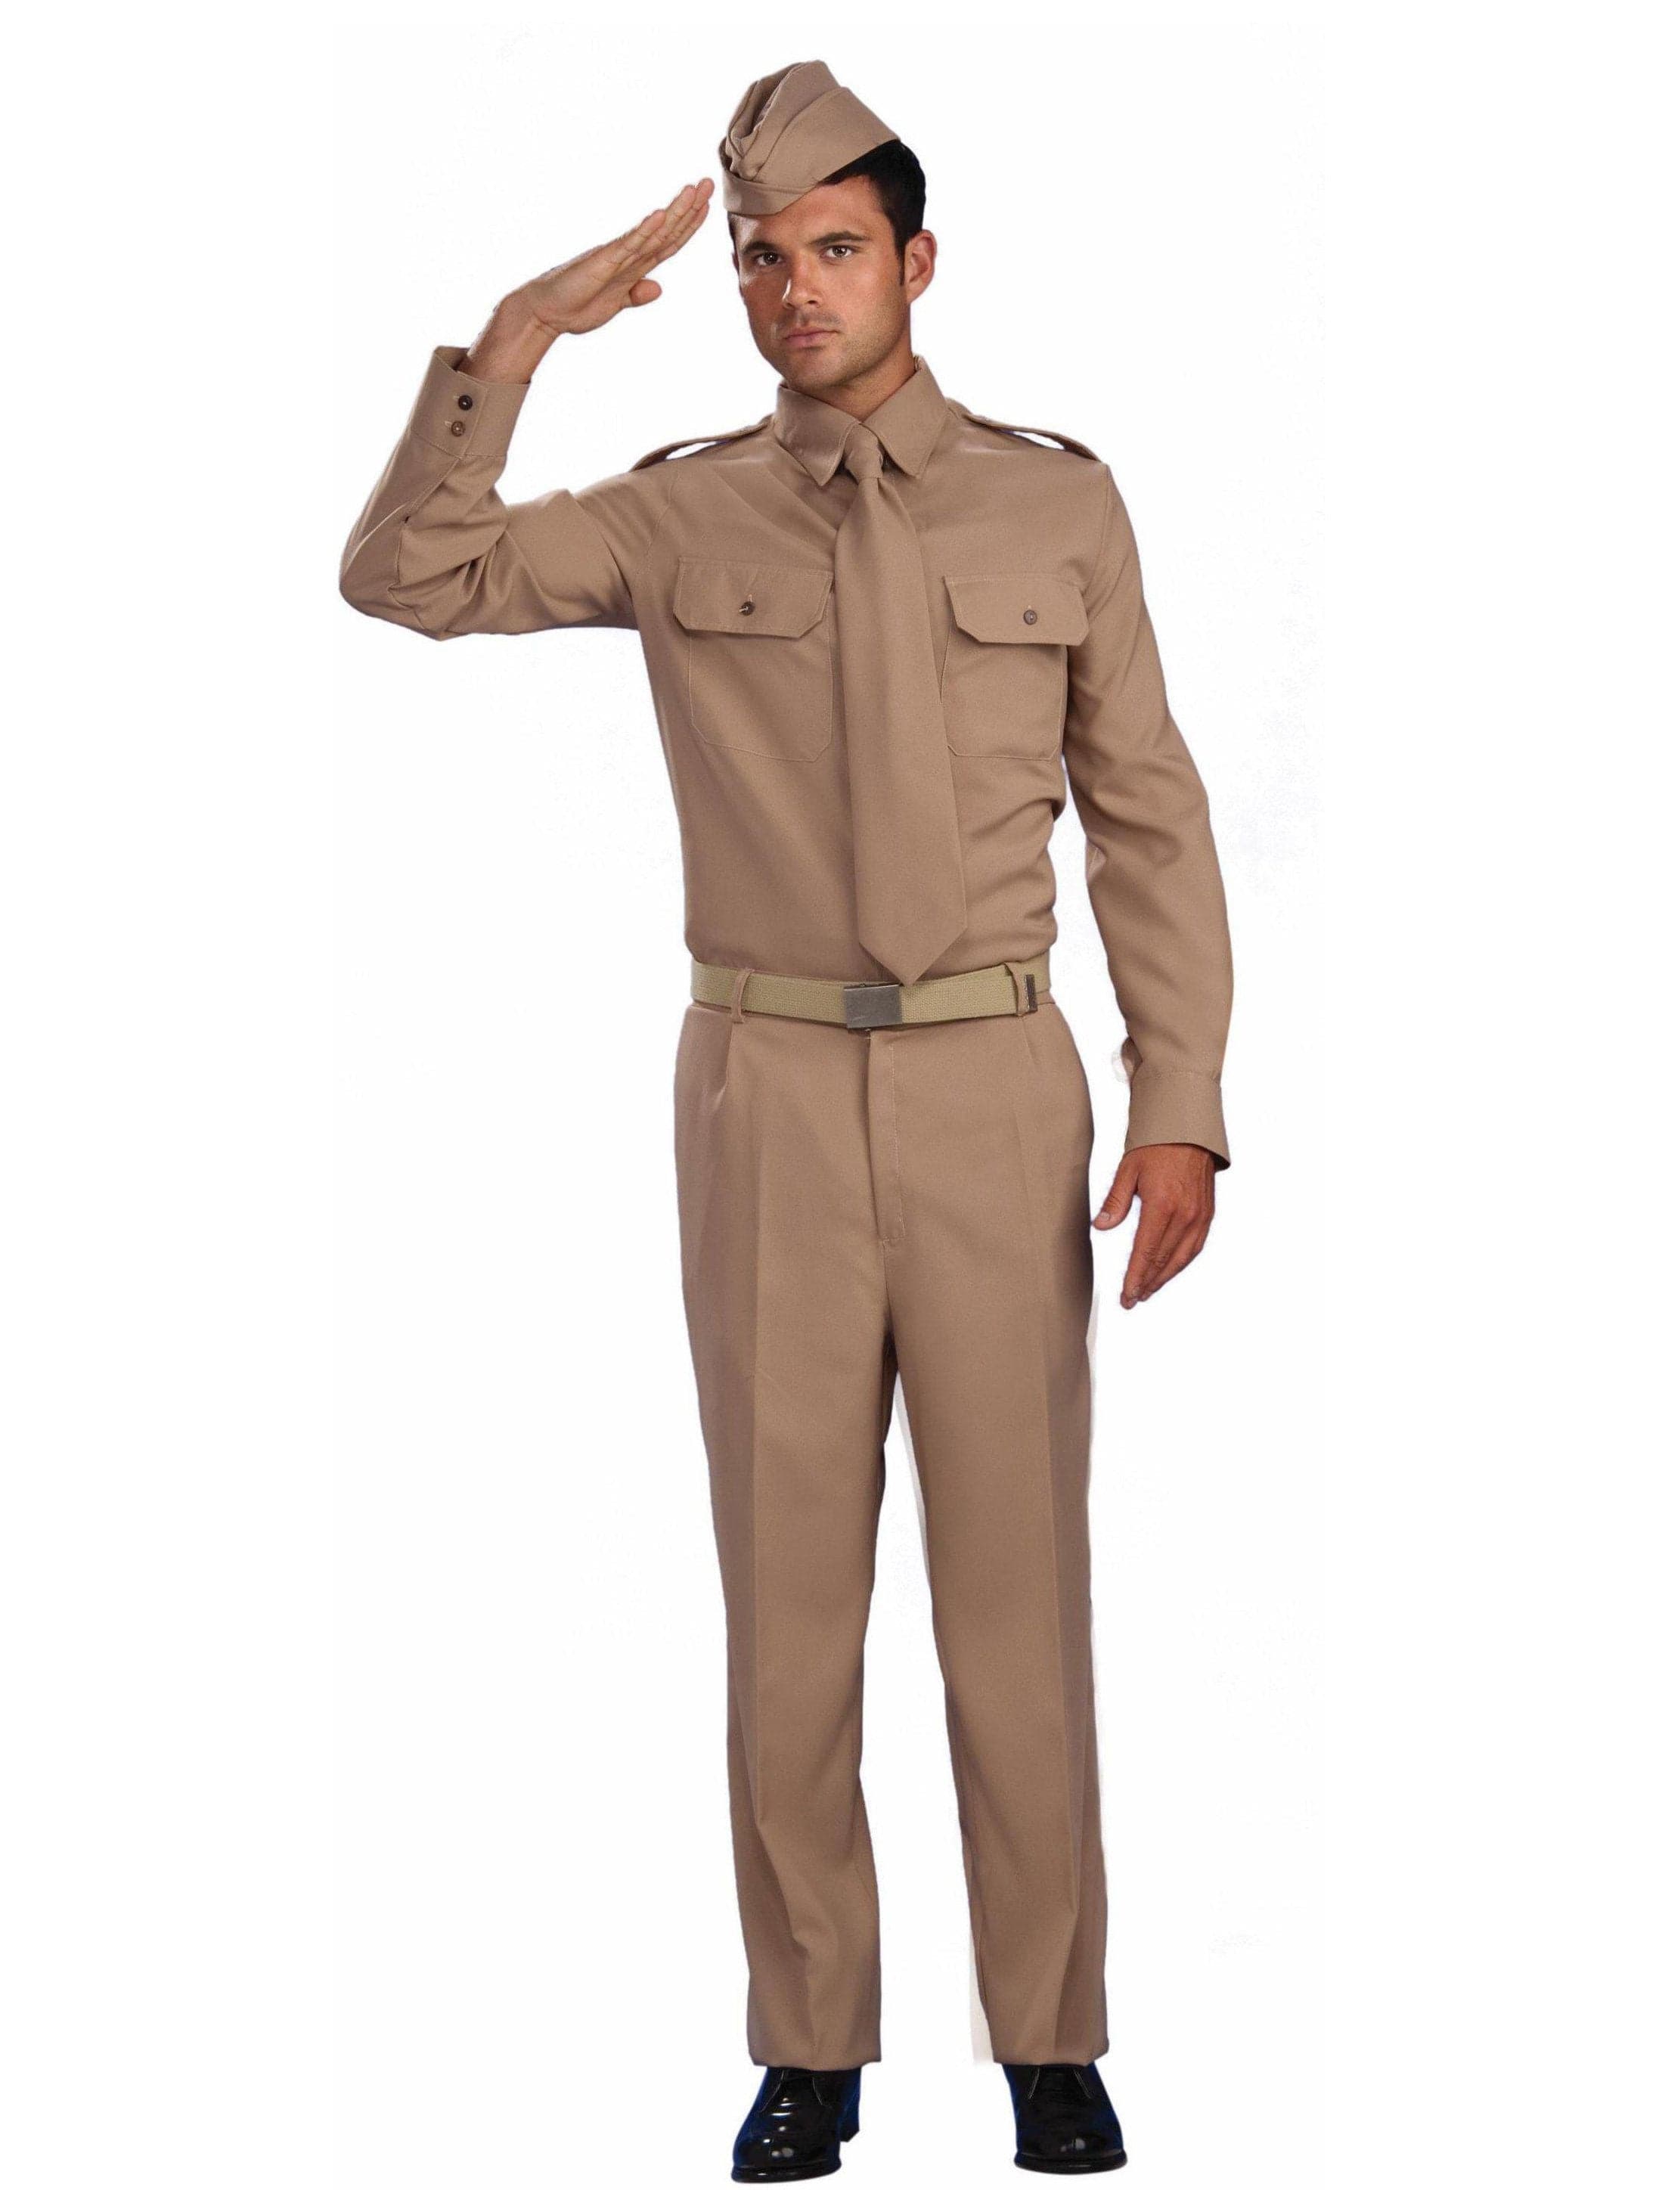 Adult World War II Private Costume - costumes.com